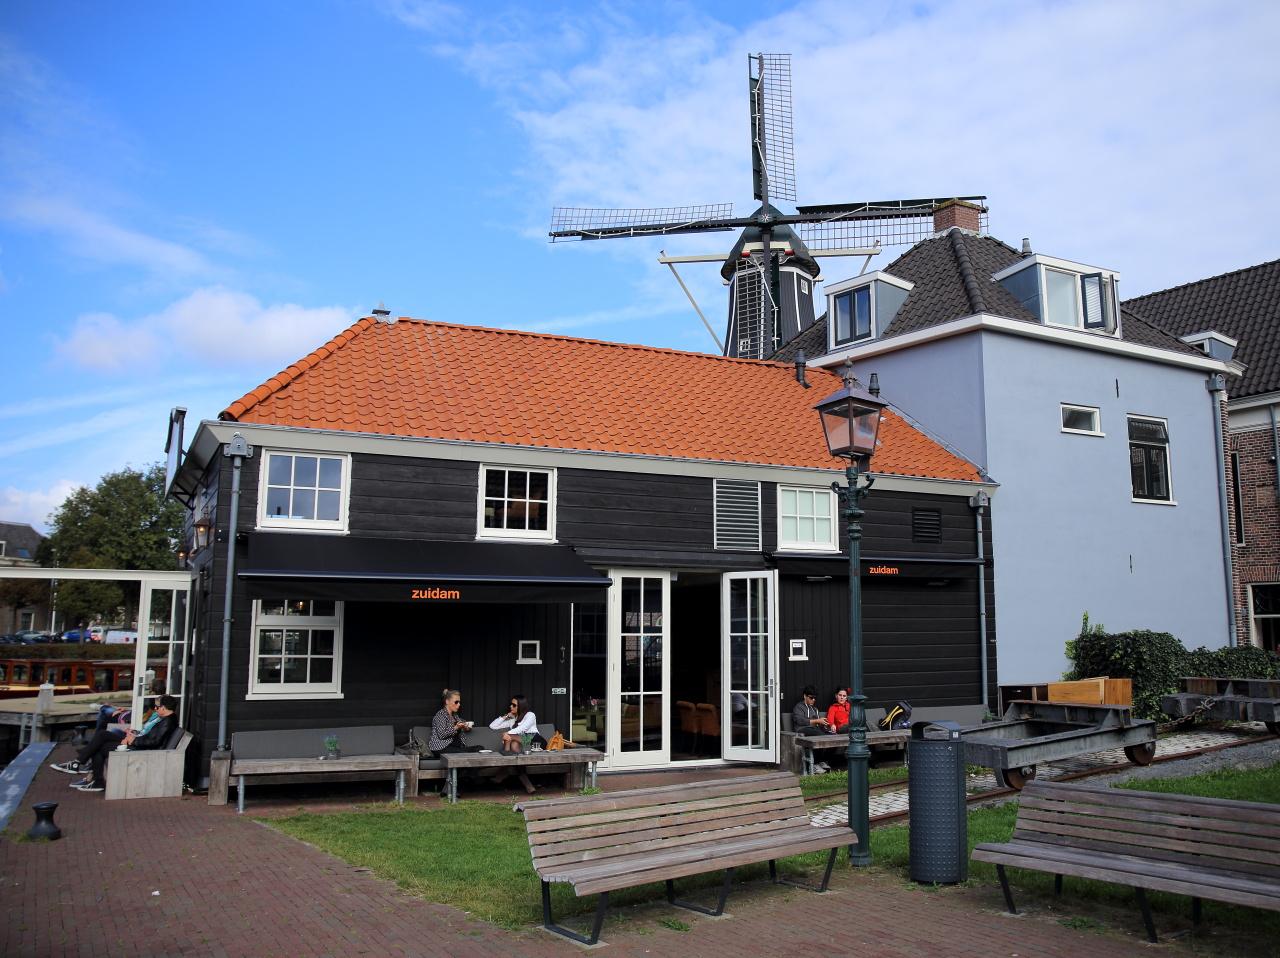 Foto Restaurant Zuidam in Haarlem, Eten & drinken, Koffie, Lunch, Borrel, Diner - #1